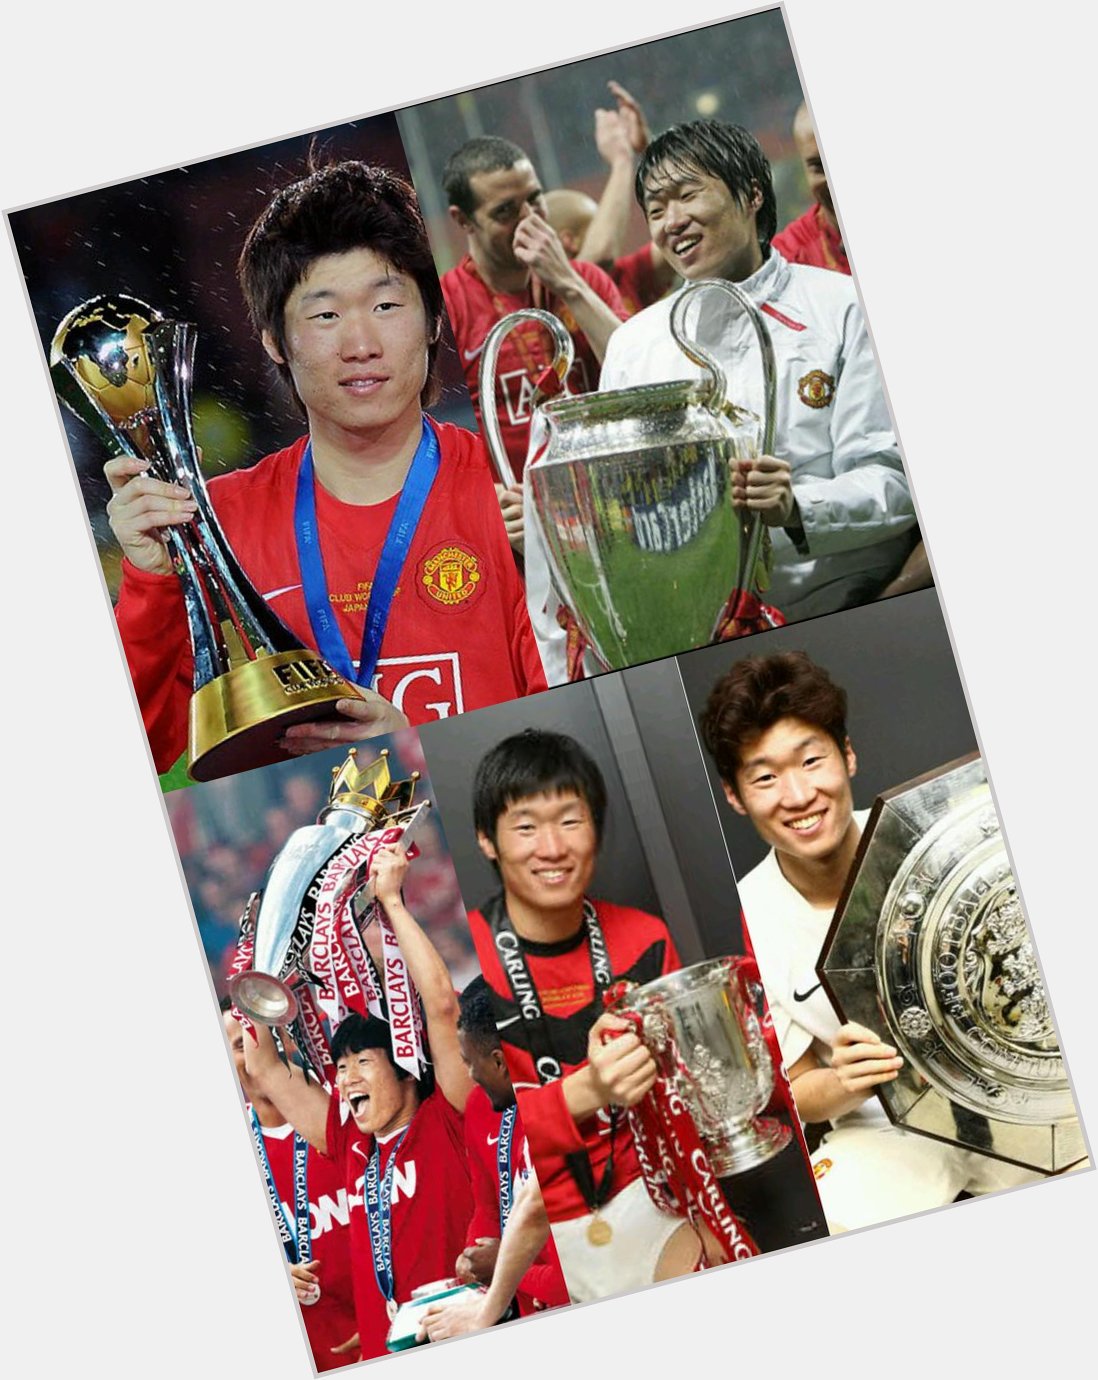 Happy 34th birthday Legend Manchester United, Park Ji Sung! 